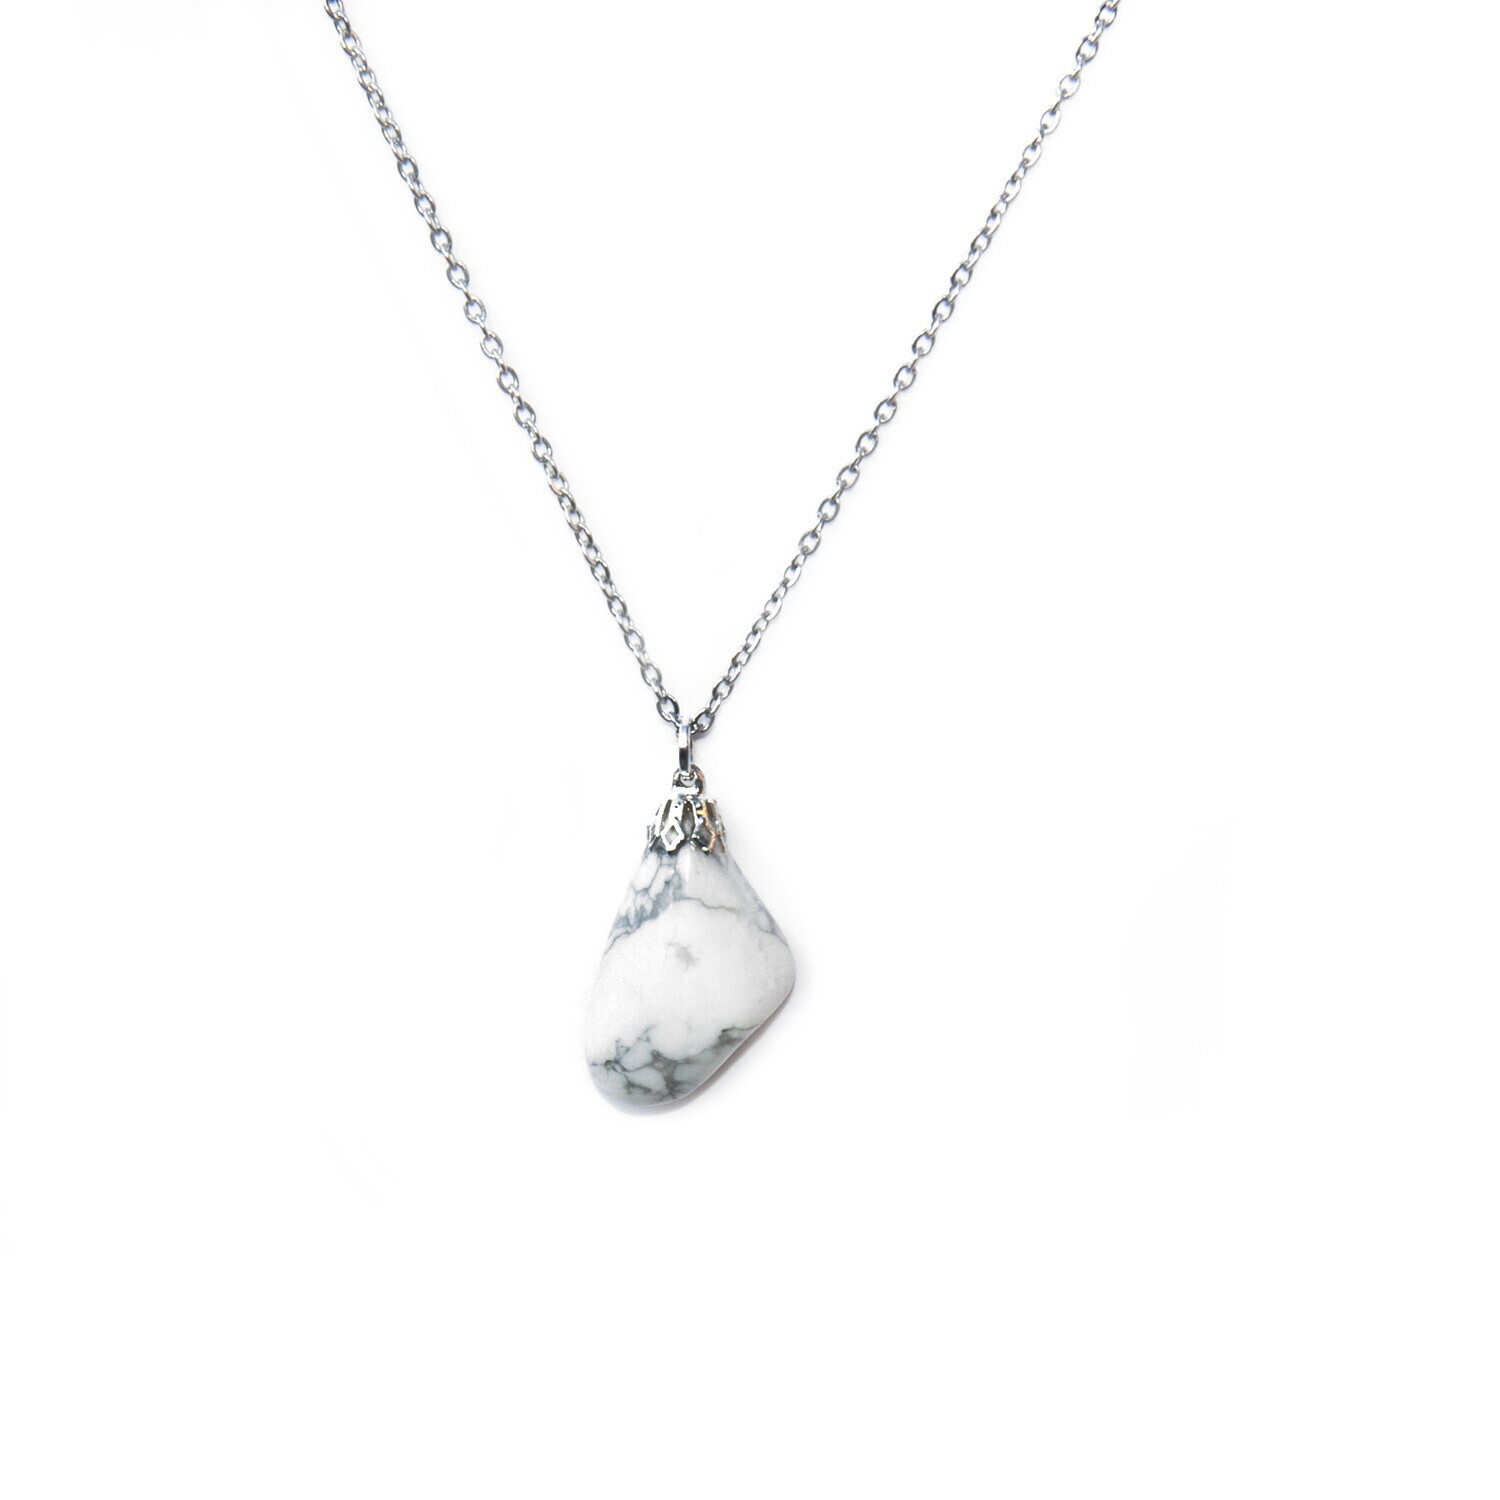 Howlite pendant gemstone necklace